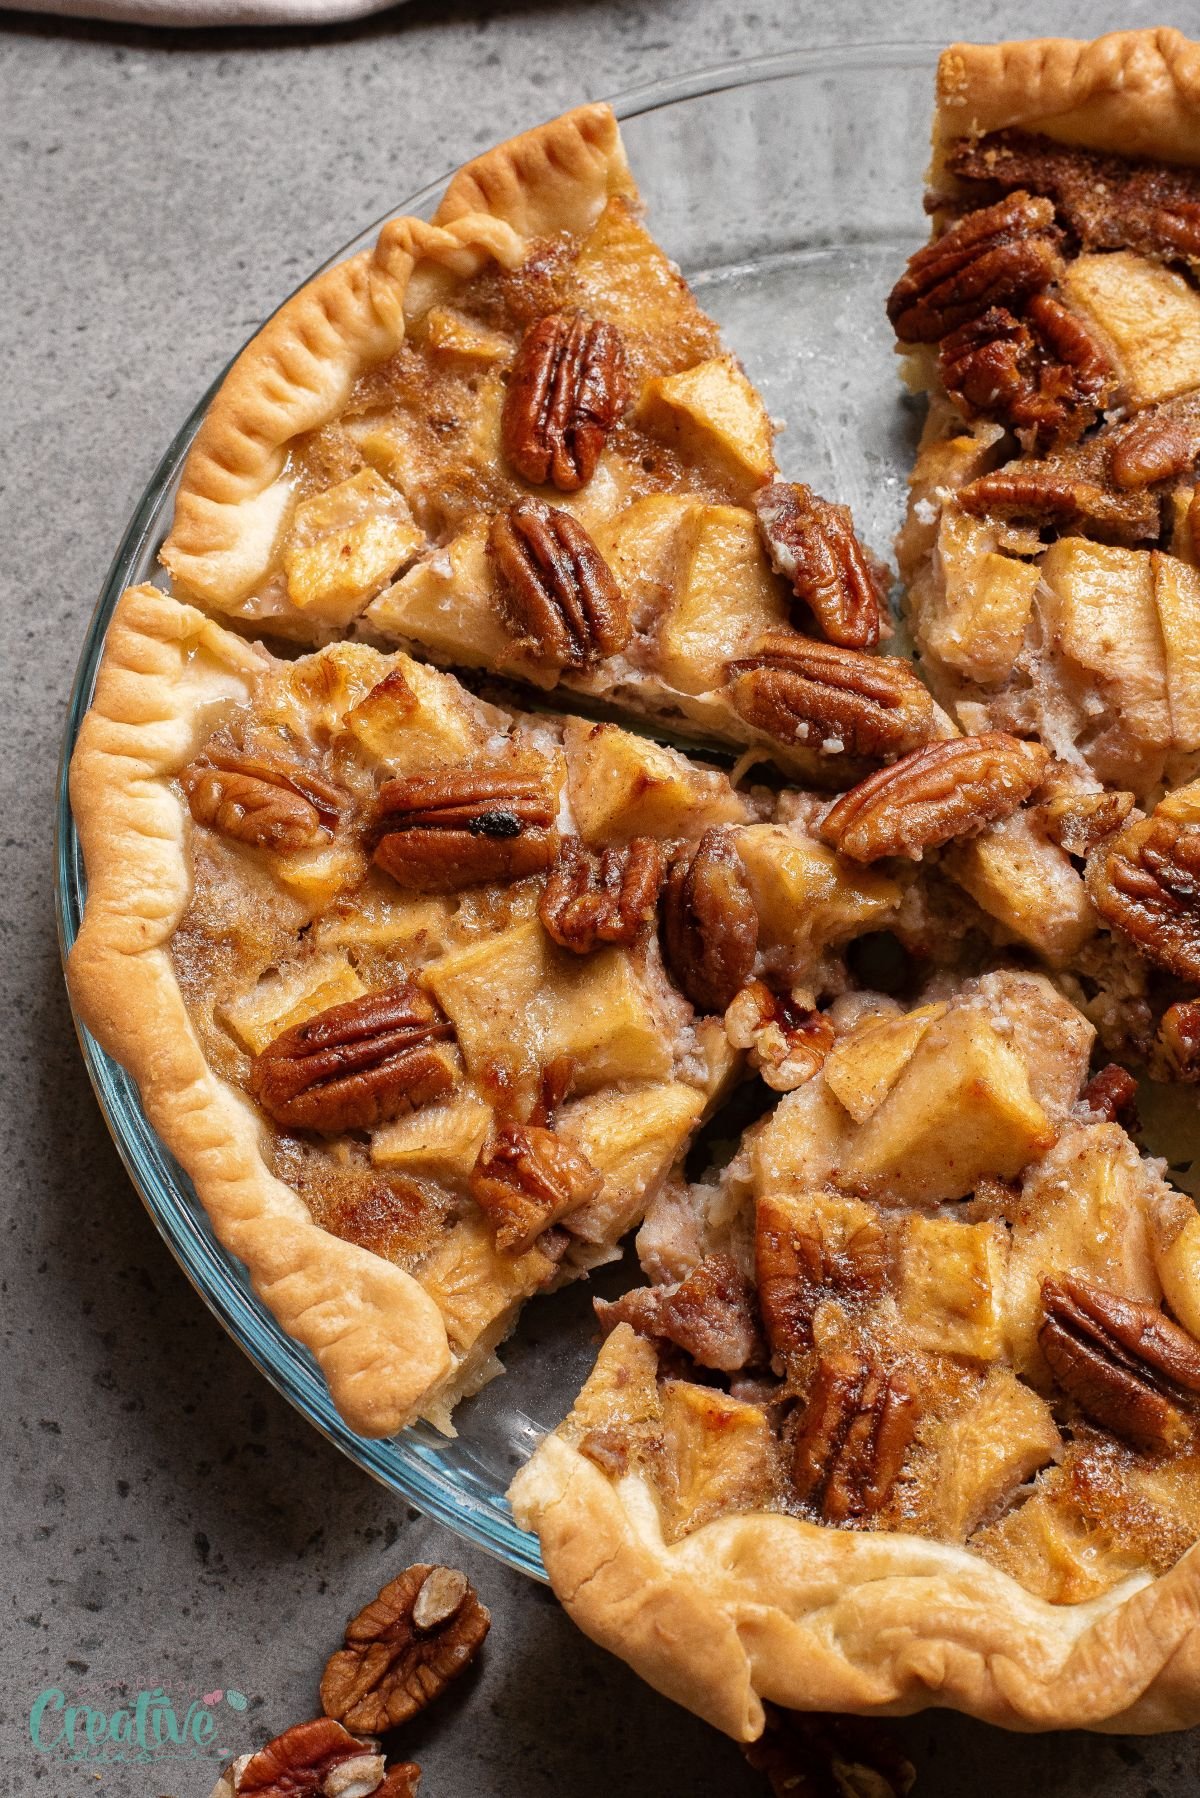 Bourbon pecan pie with apples